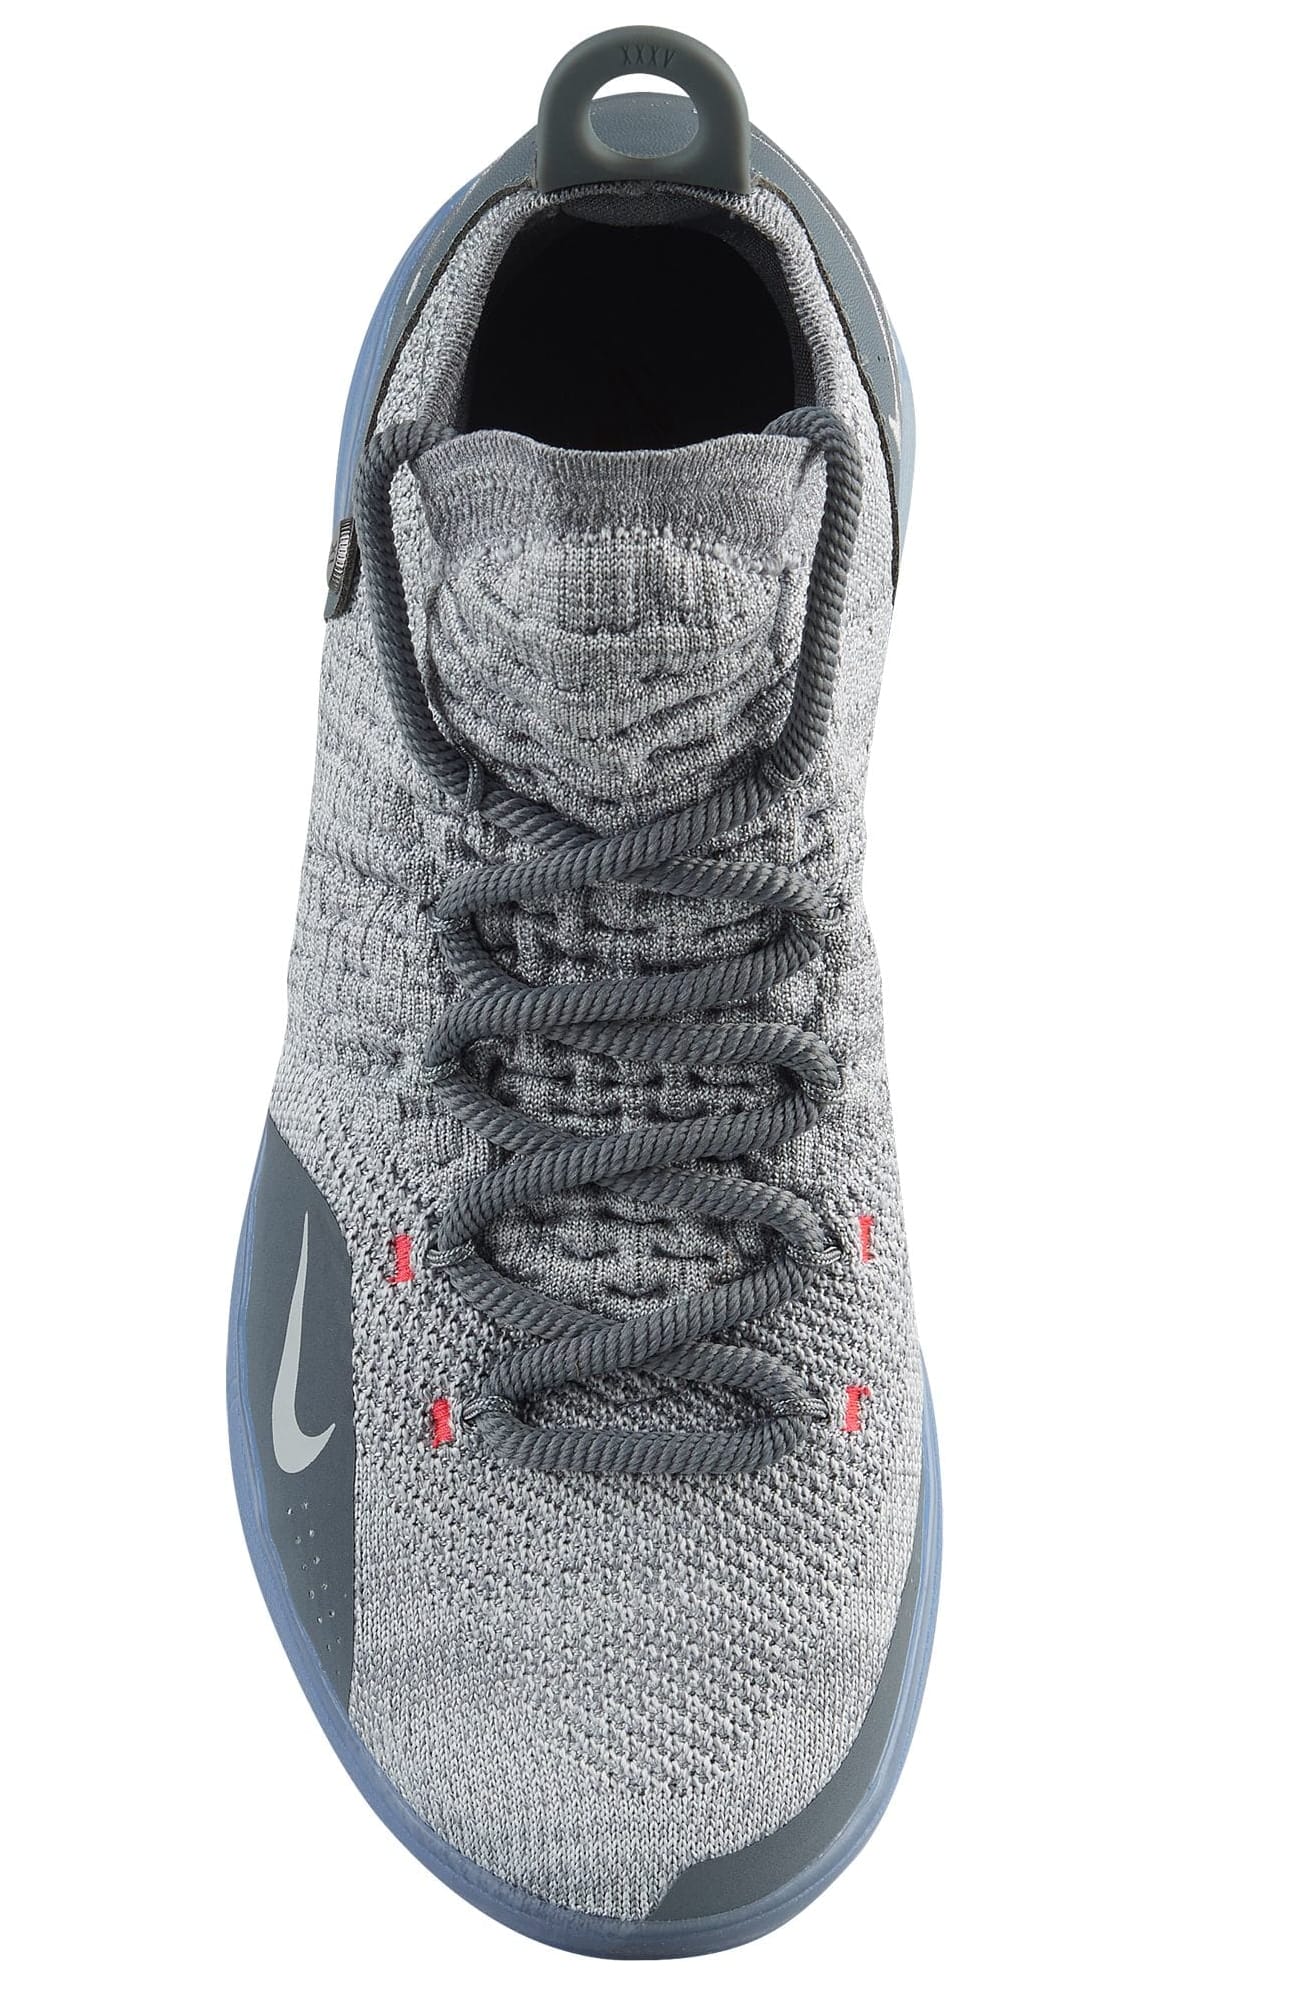 Red Deals Online Retail Store - Nike KD 11 Cool Grey Kevin Durant Wolf Grey  Men's Size 12 AO2604-002  #sellers  #nikekd11coolgrey #sneakerheads #sneakerheadatl #sneakerdaily  #sneakerfreaker #kicksoftheday #reddealsonline #shop